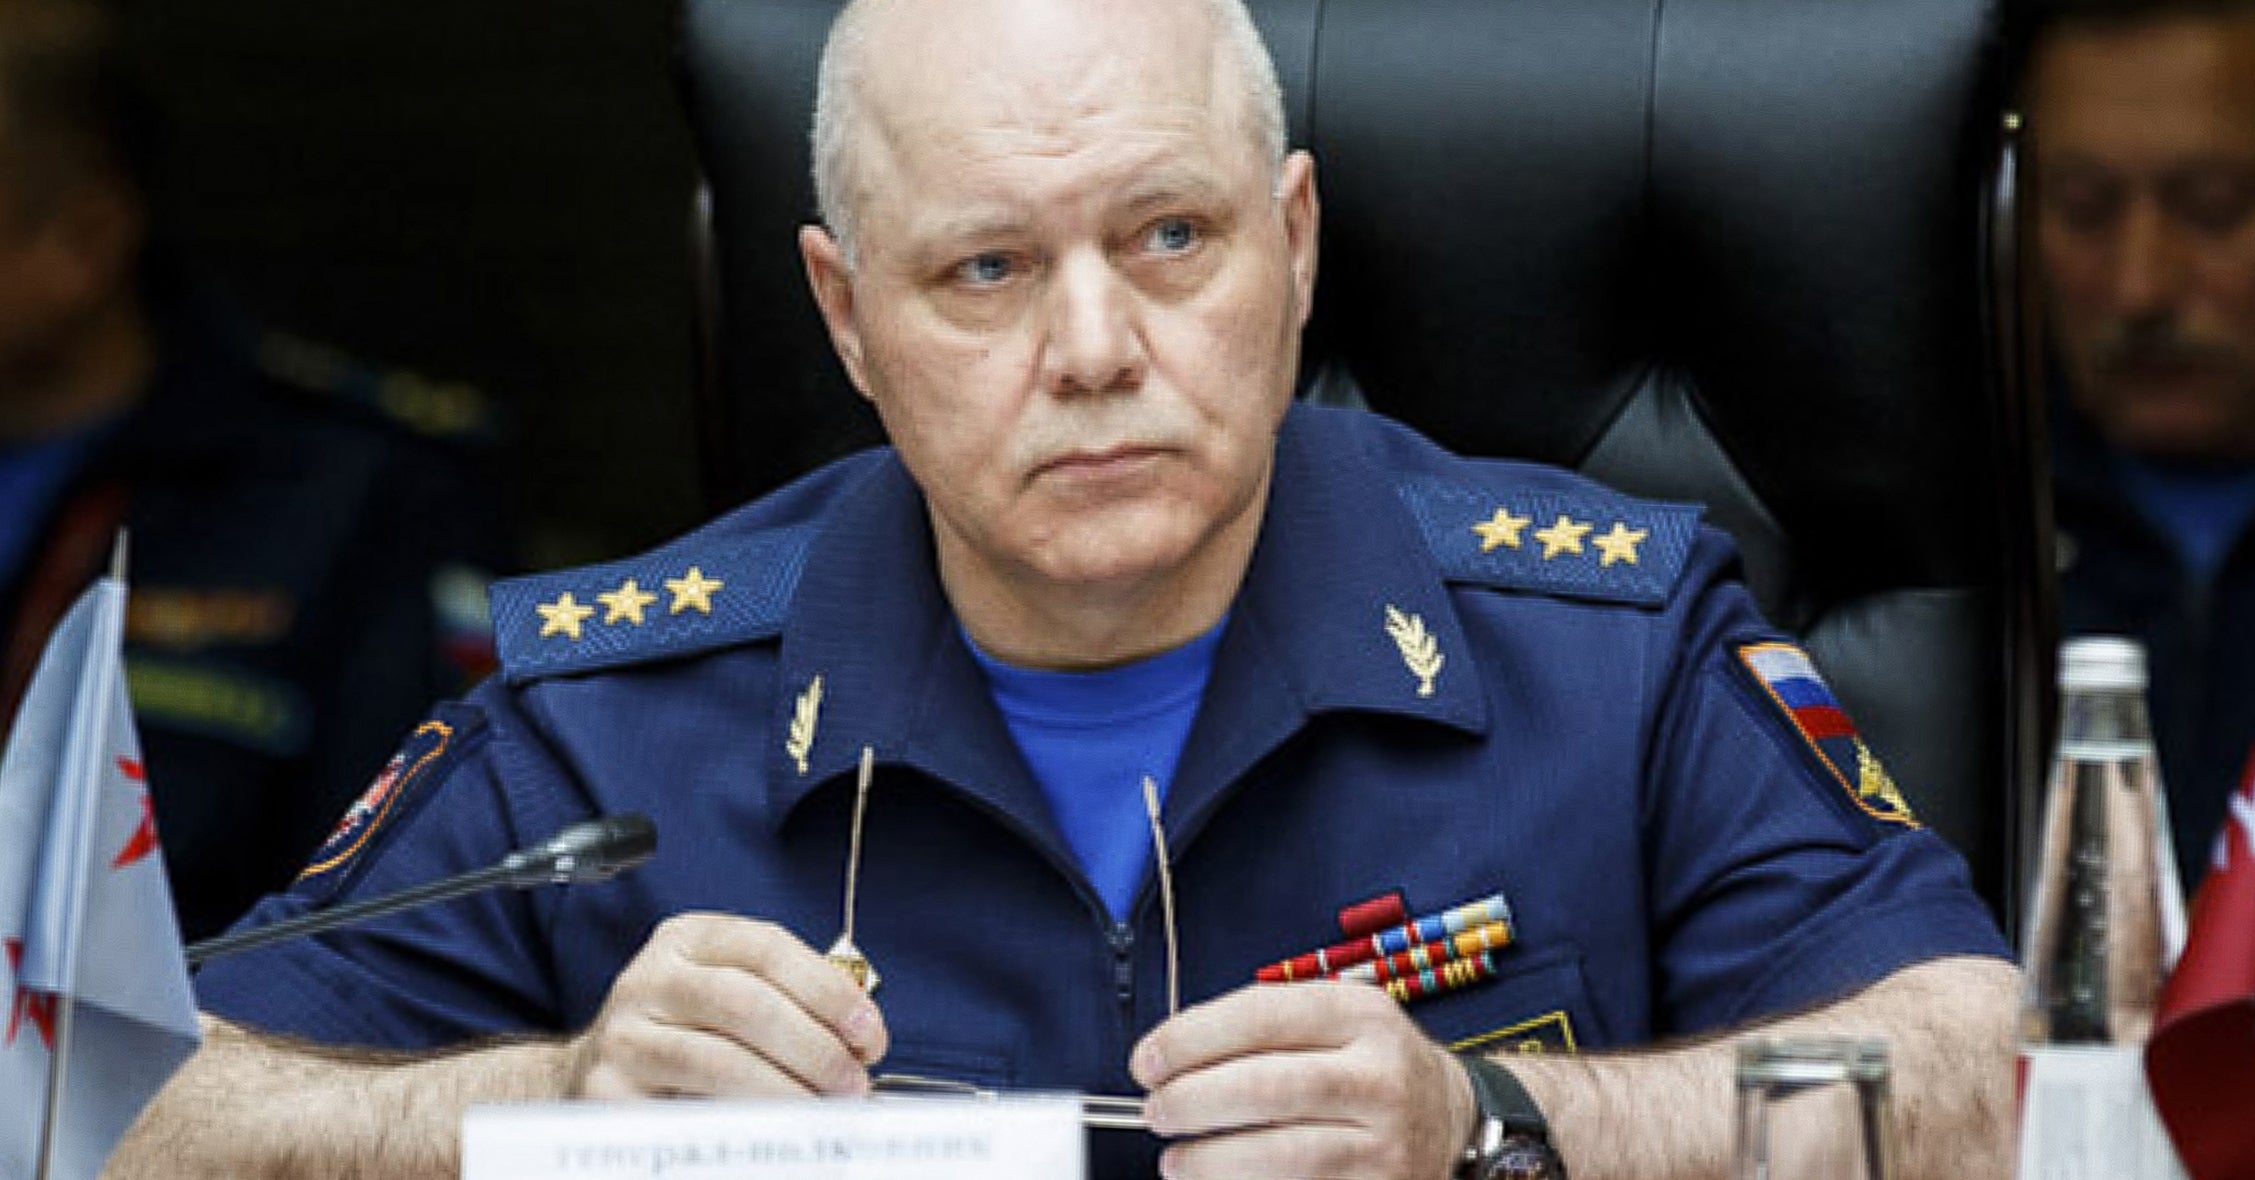 Igor Korobov The Head Of Russia S Military Intelligence Agency The Gru Has Died